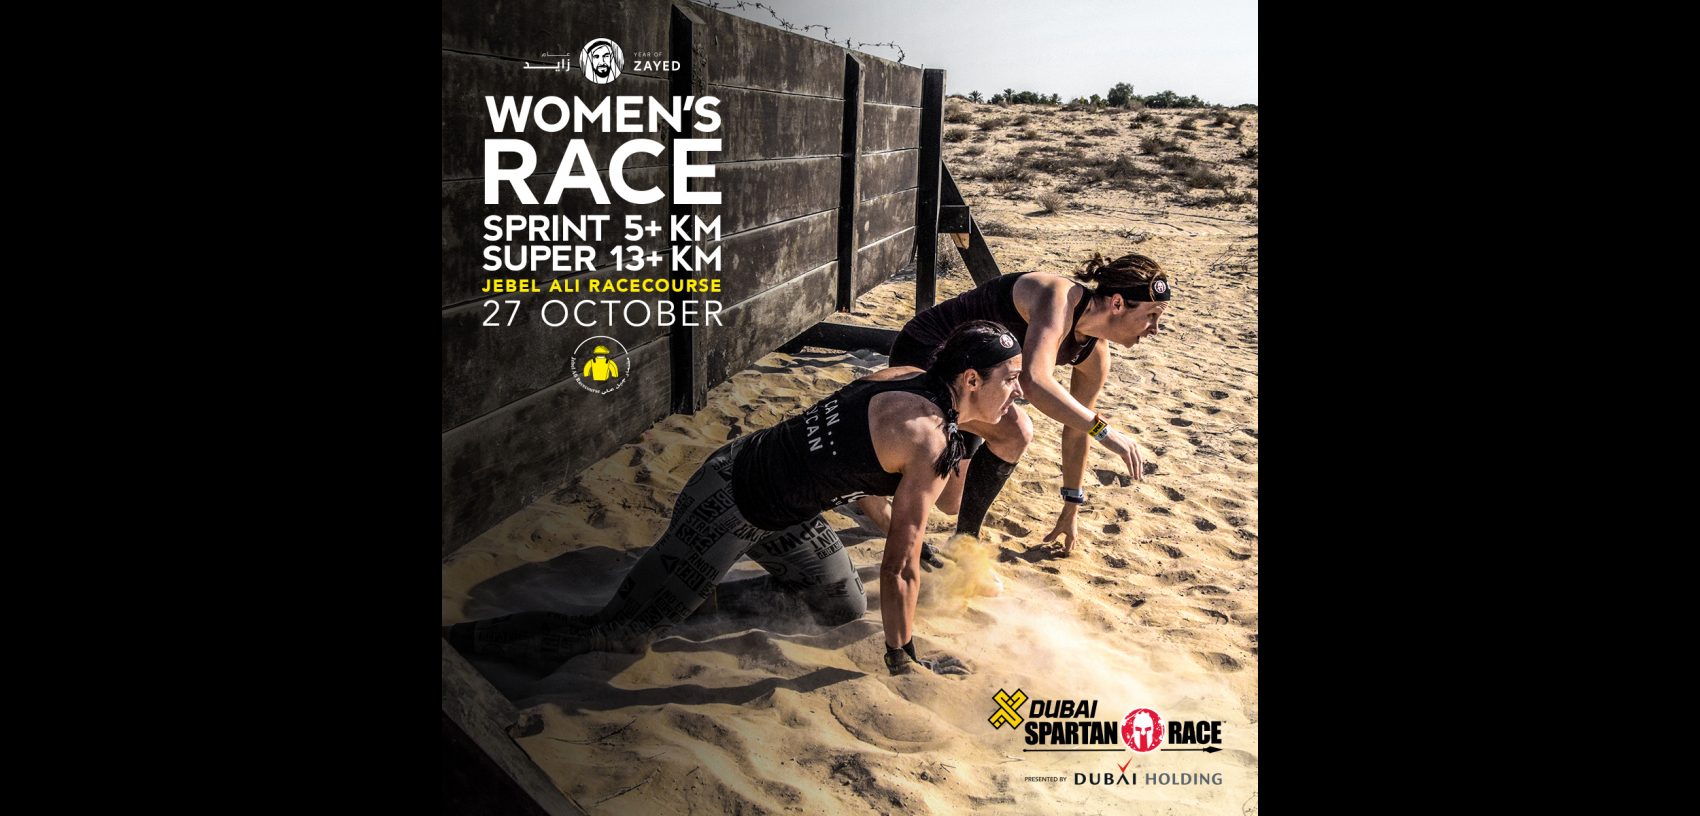 XDubai Spartan Women’s Race 2018 - Coming Soon in UAE